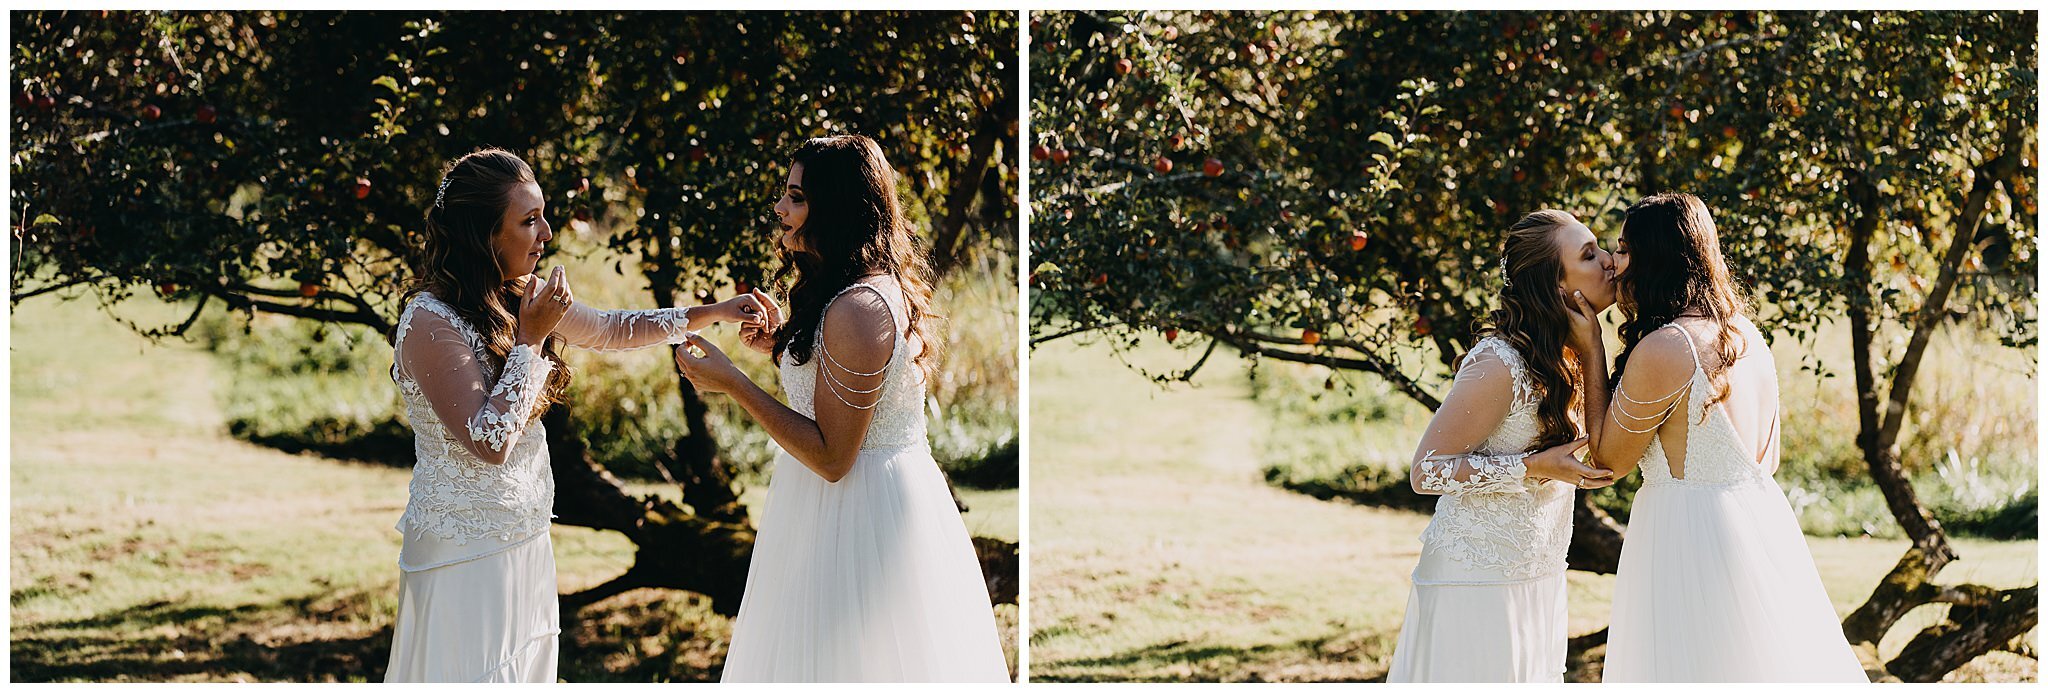 winlock-washington-backyard-wedding-ana-carly-jamie-buckley-photography-18.jpg